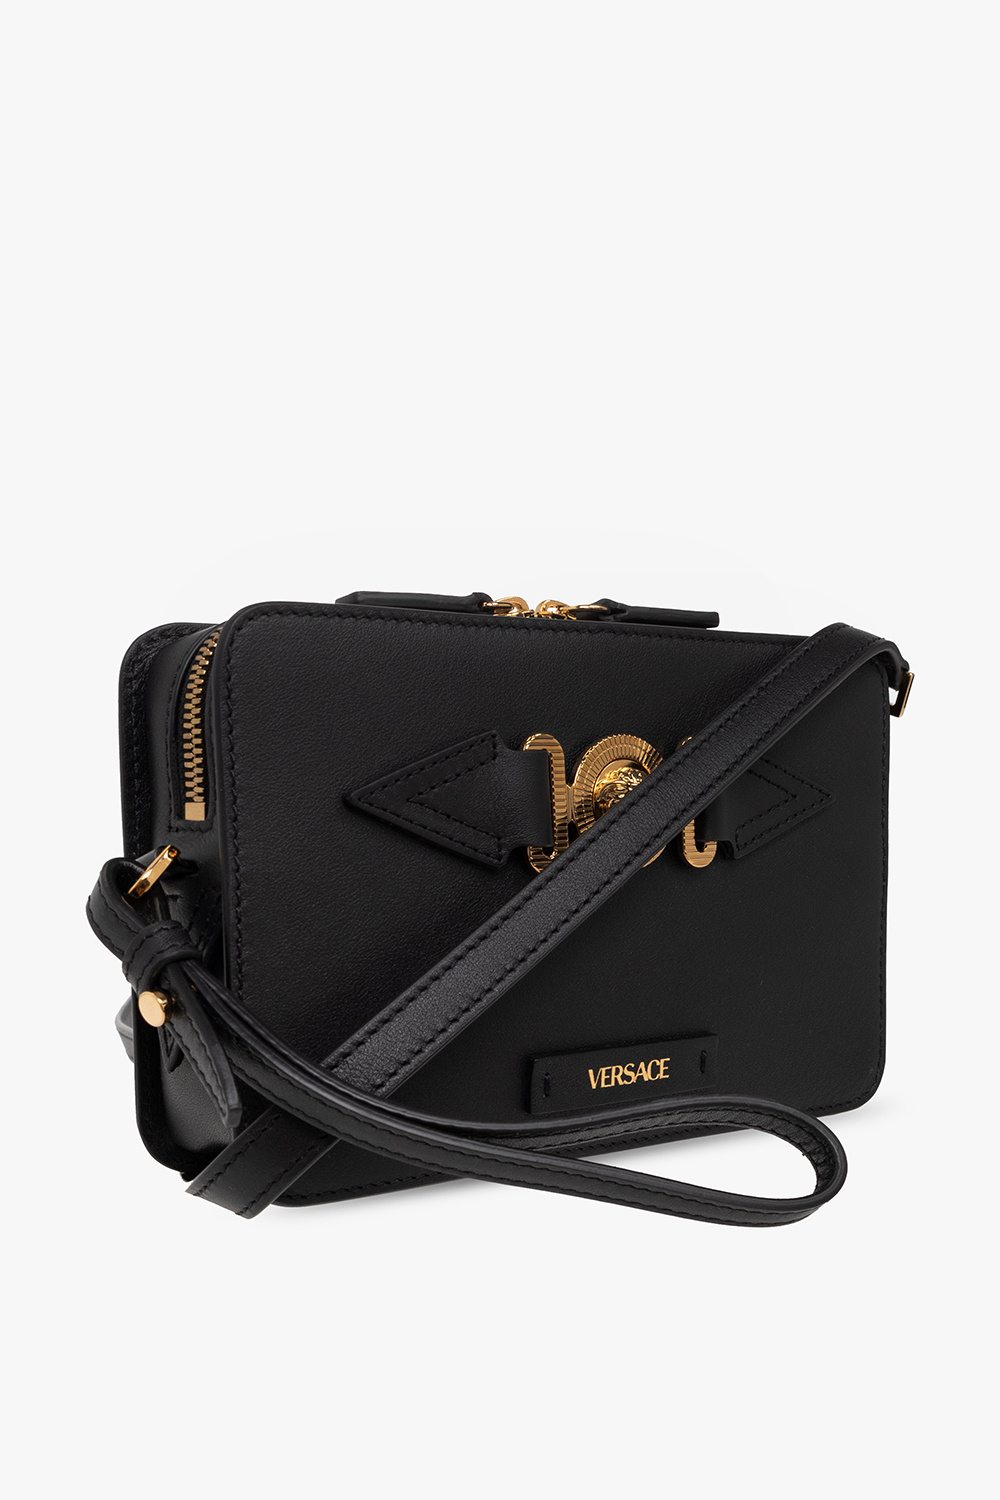 Versace Coach monogram leather shoulder bag